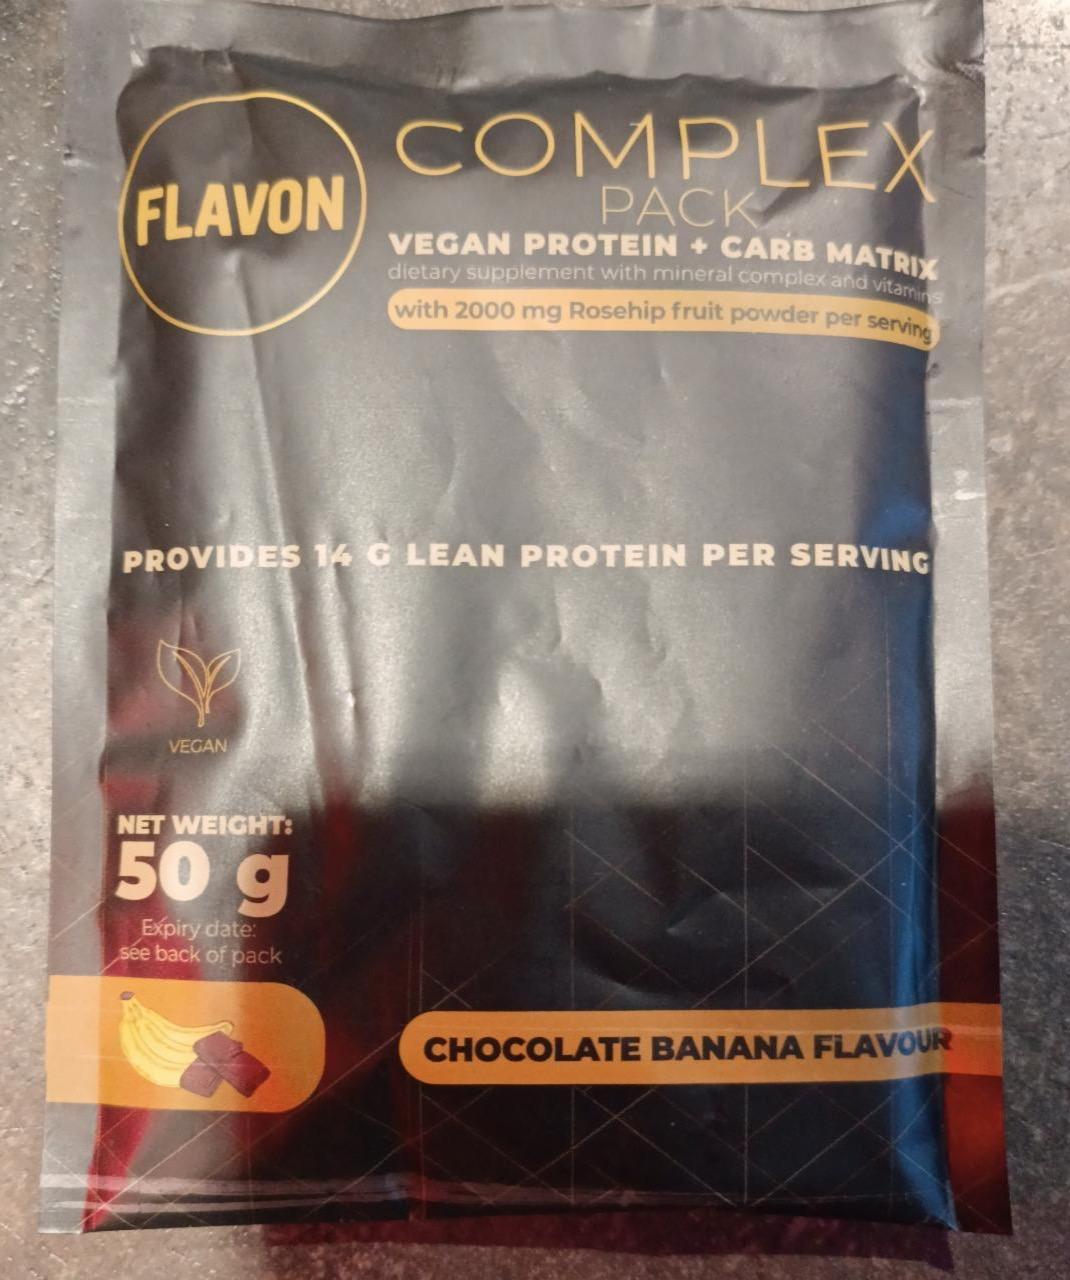 Képek - Complex pack Chocolate banana flavour Flavon